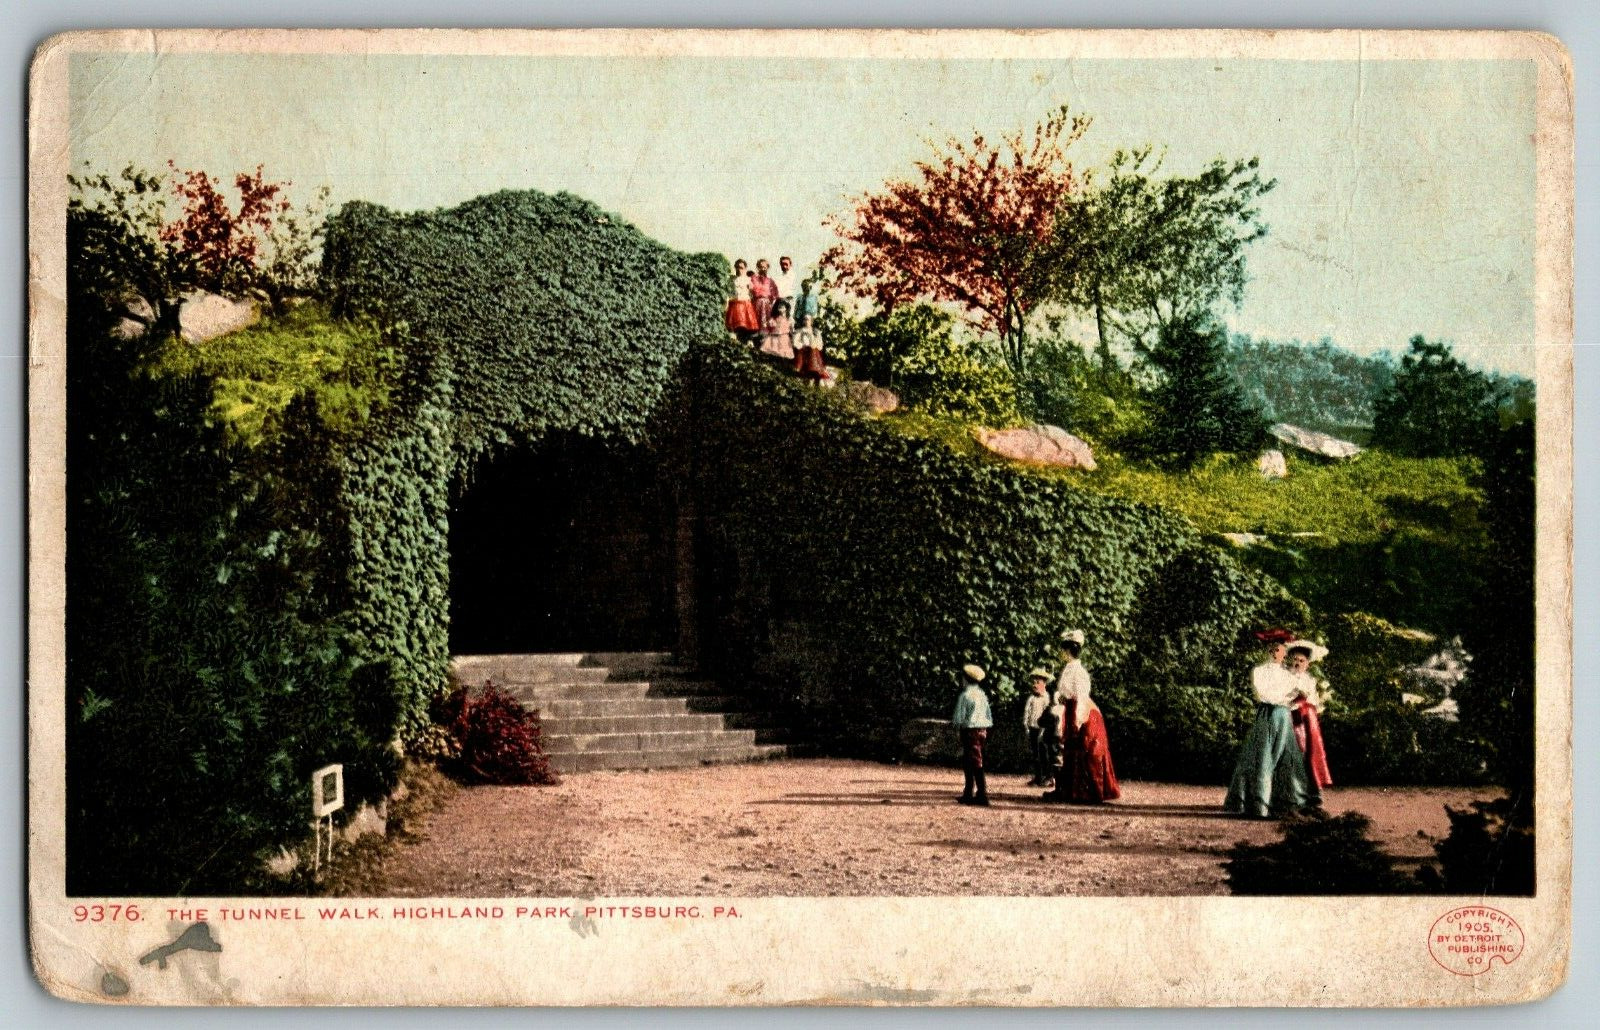 Pittsburg, Pennsylvania - The Tunnel Walk Highland Park - Vintage Postcard